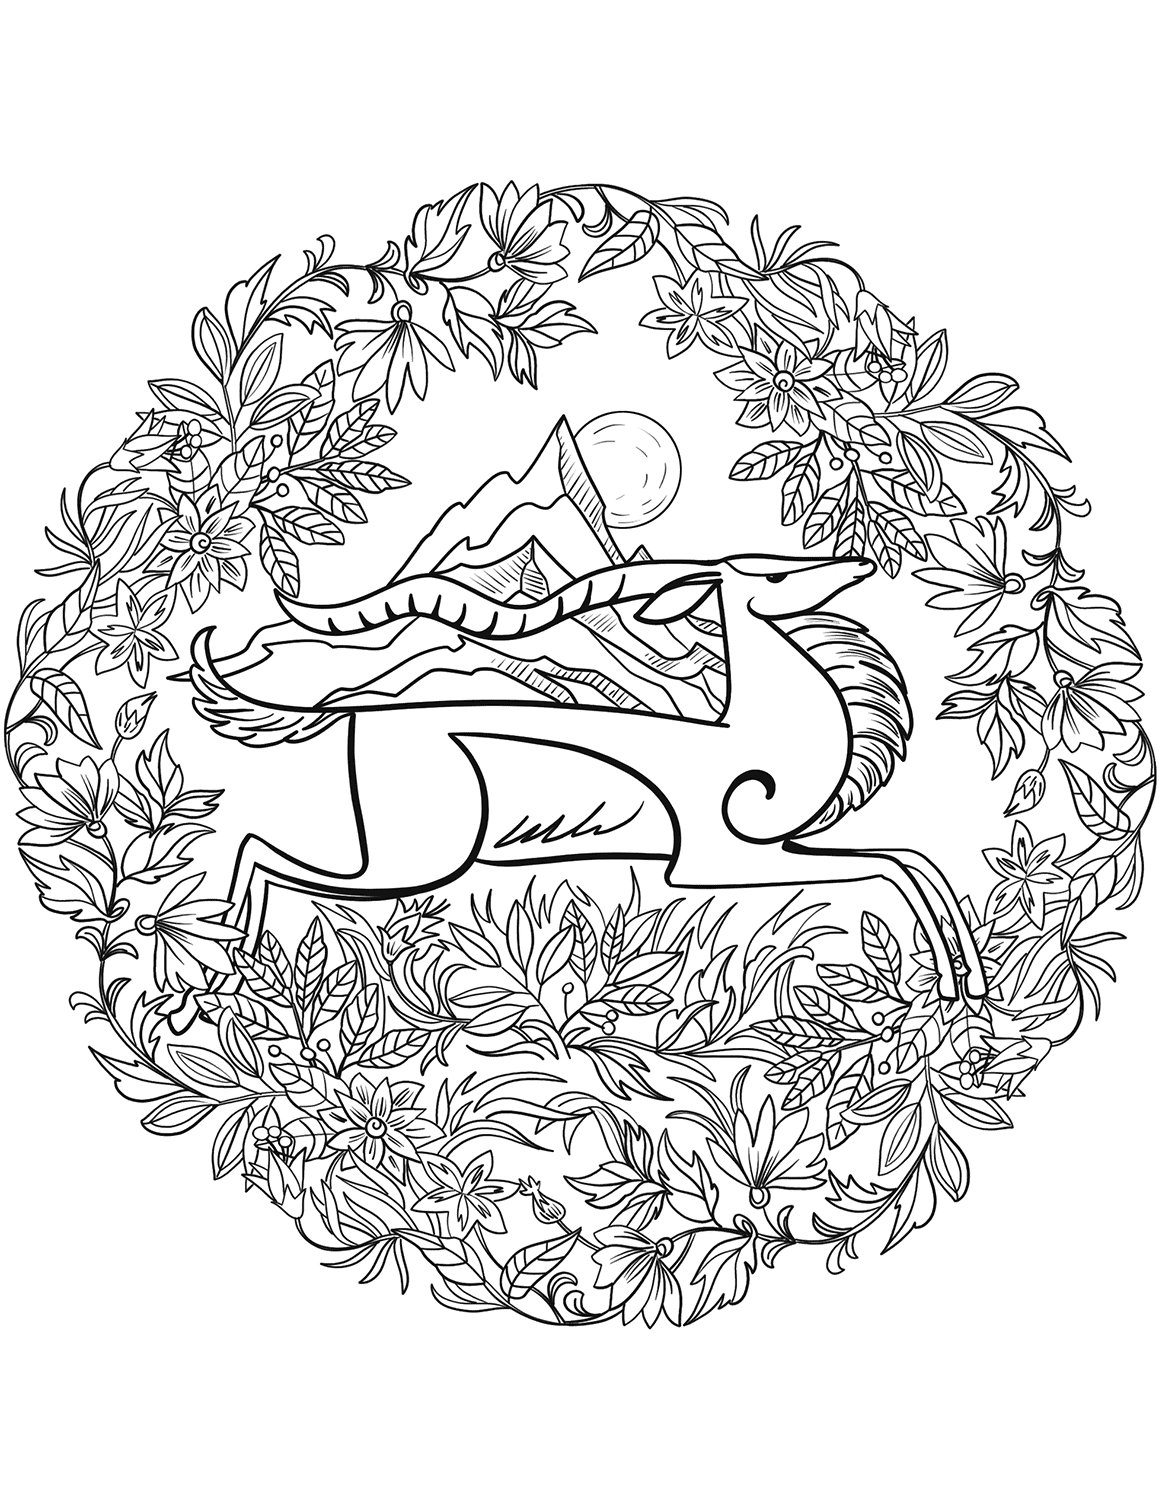 Mandala with a noble deer